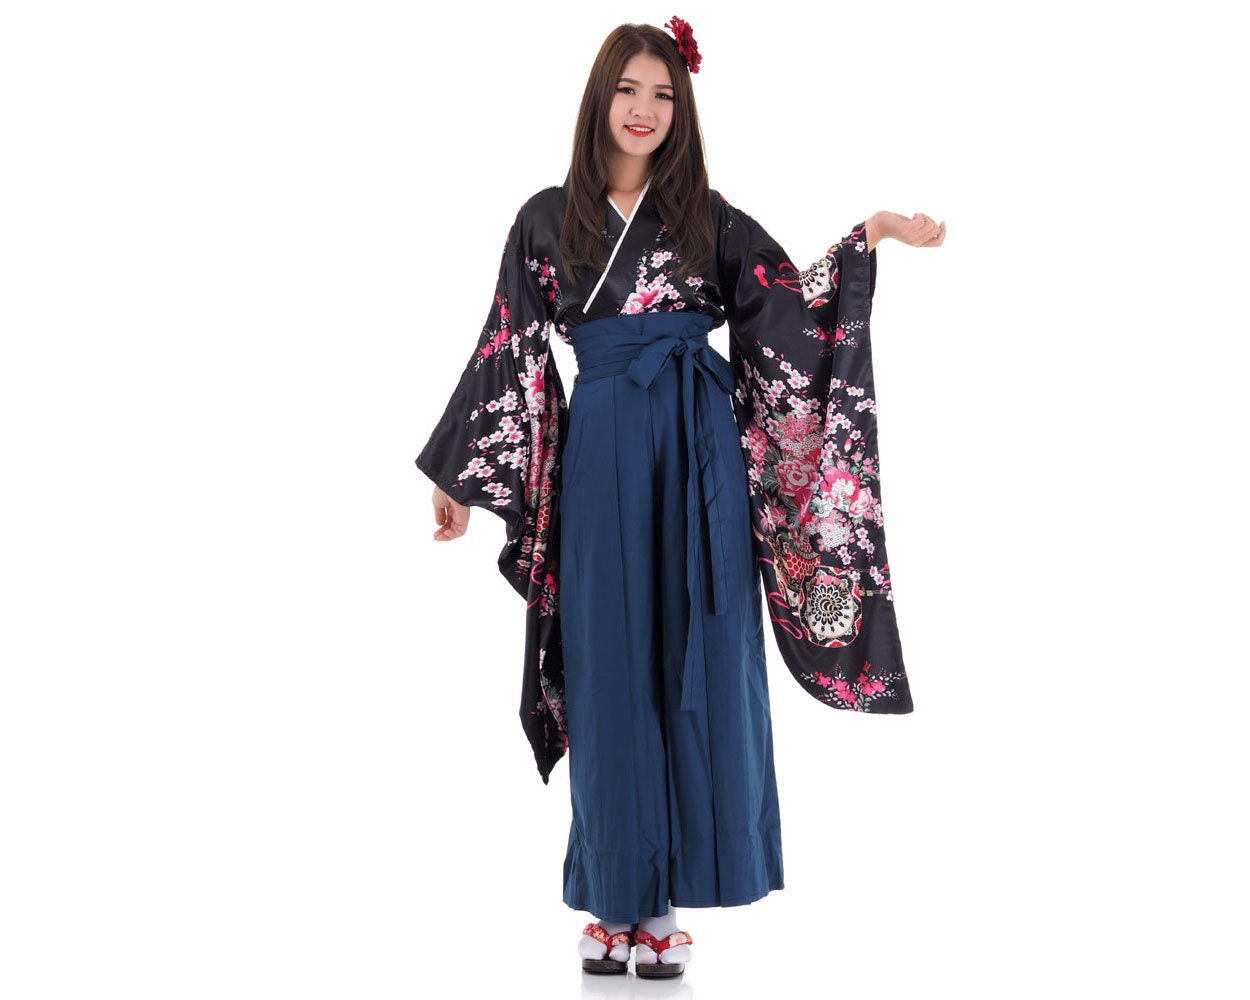 Fotos gratis : persona, mujer, músico, profesión, ropa, Picardias, kimono,  disfraz, geisha, samurai 1280x1920 - - 657039 - Imagenes gratis - PxHere